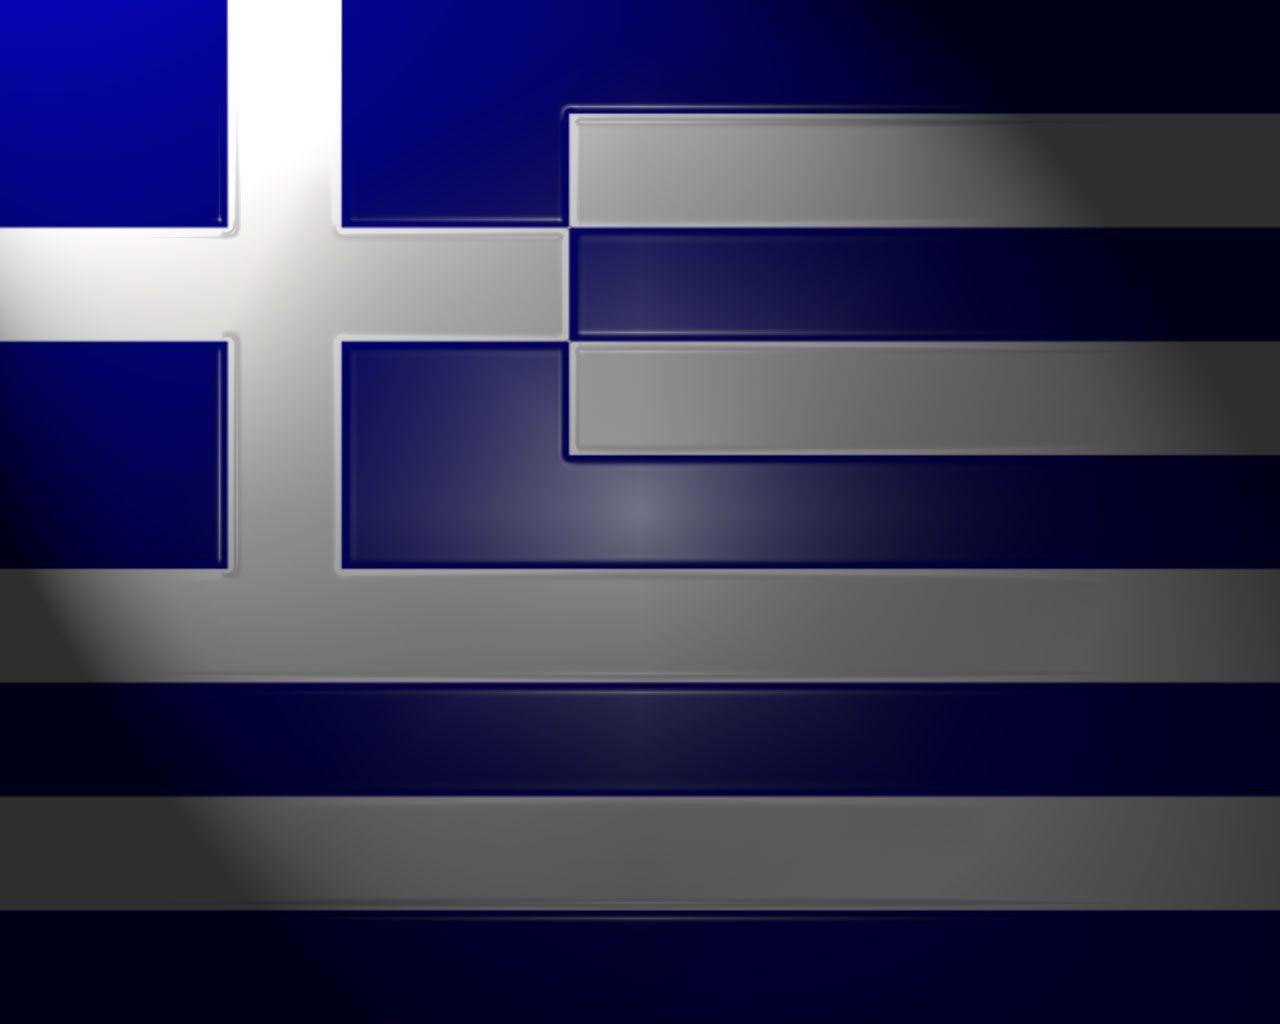 Greece Flag HD Wallpaper, Backgrounds Image